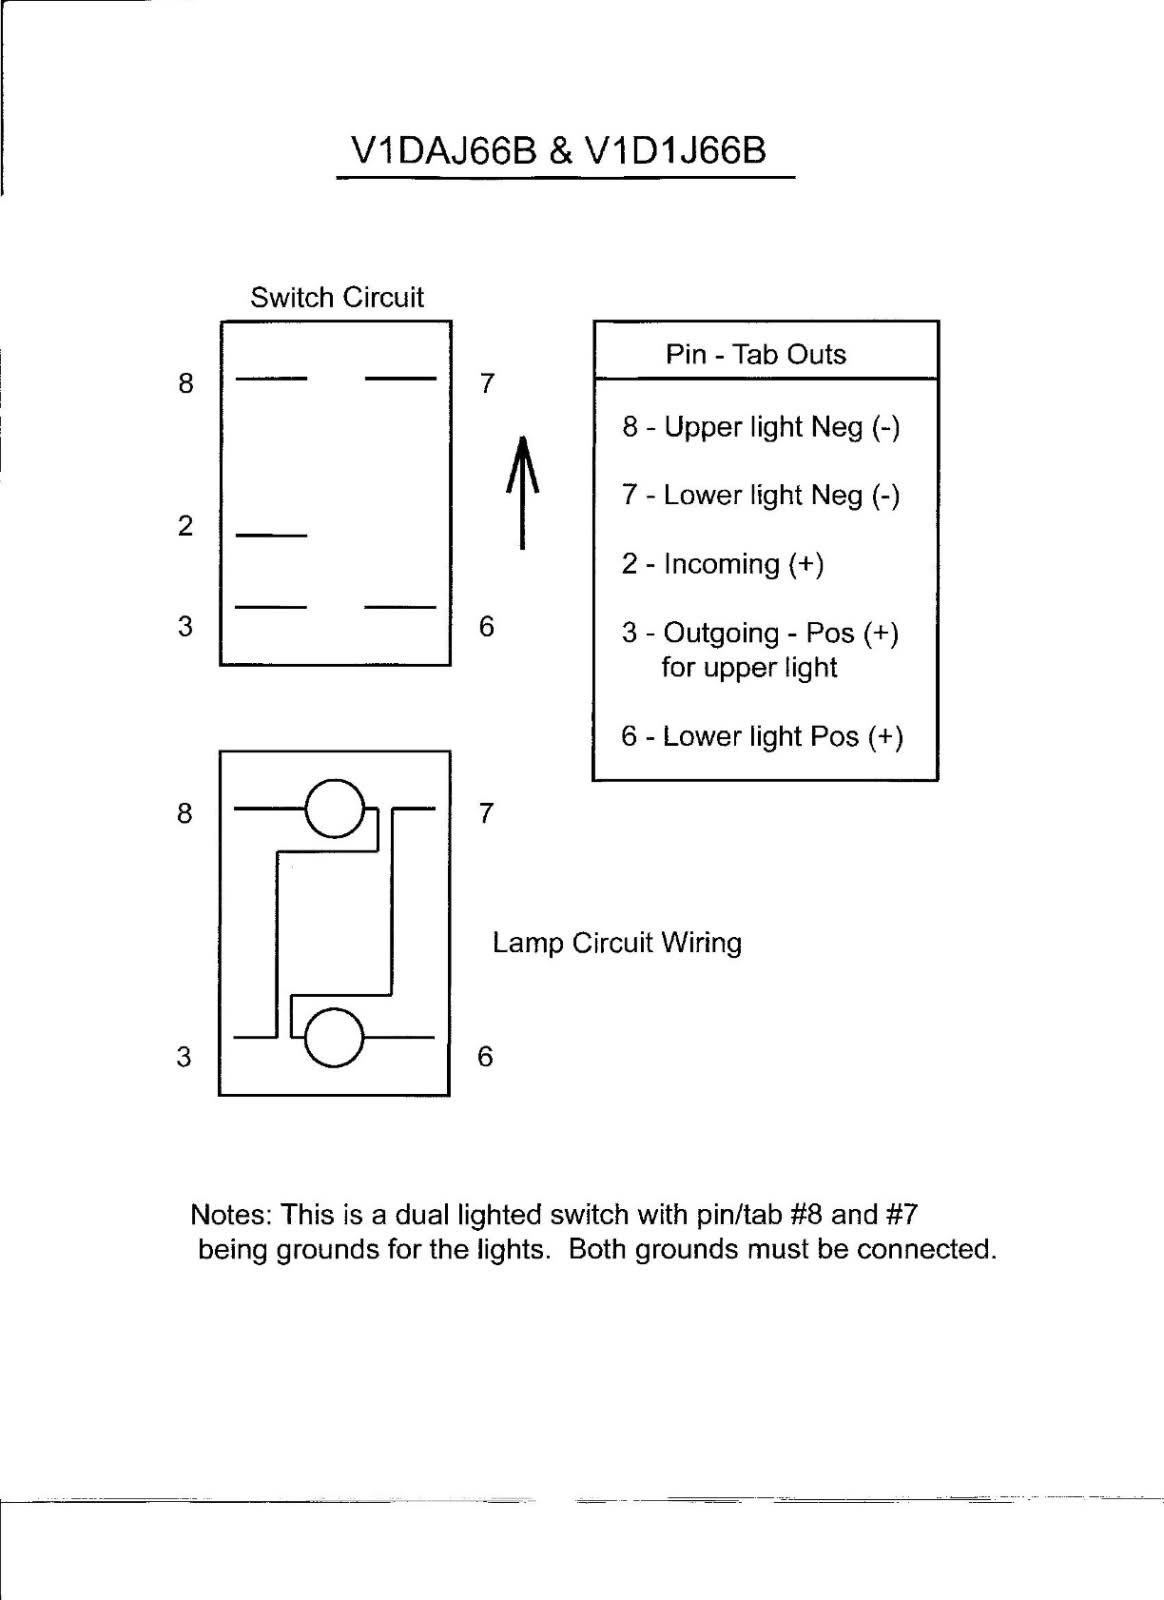 Illuminated Rocker Switch Wiring Diagram | Wiring Diagram - 5 Pin Rocker Switch Wiring Diagram